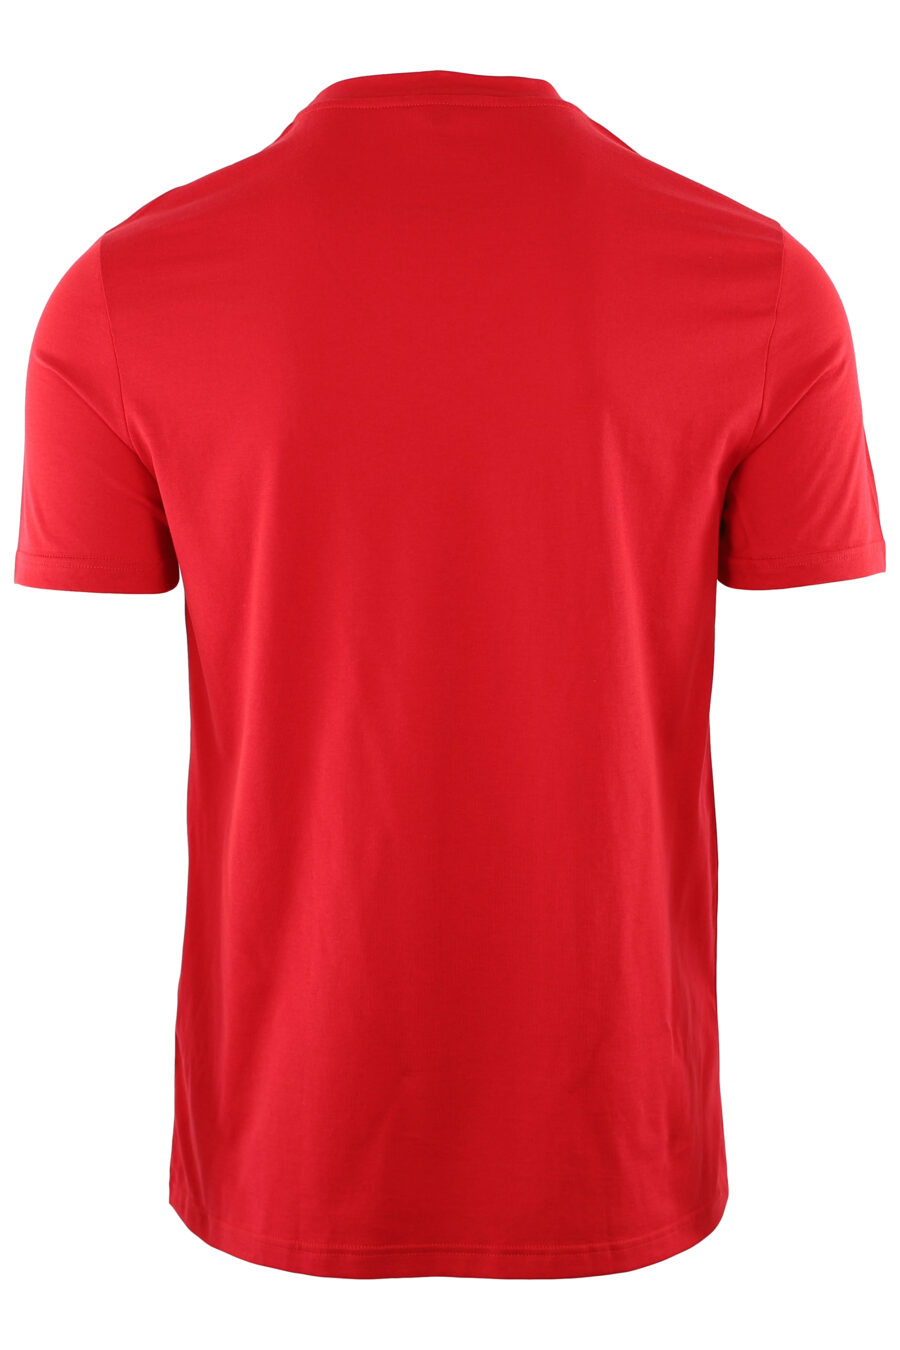 T-shirt rouge avec logo brodé blanc - IMG 7410